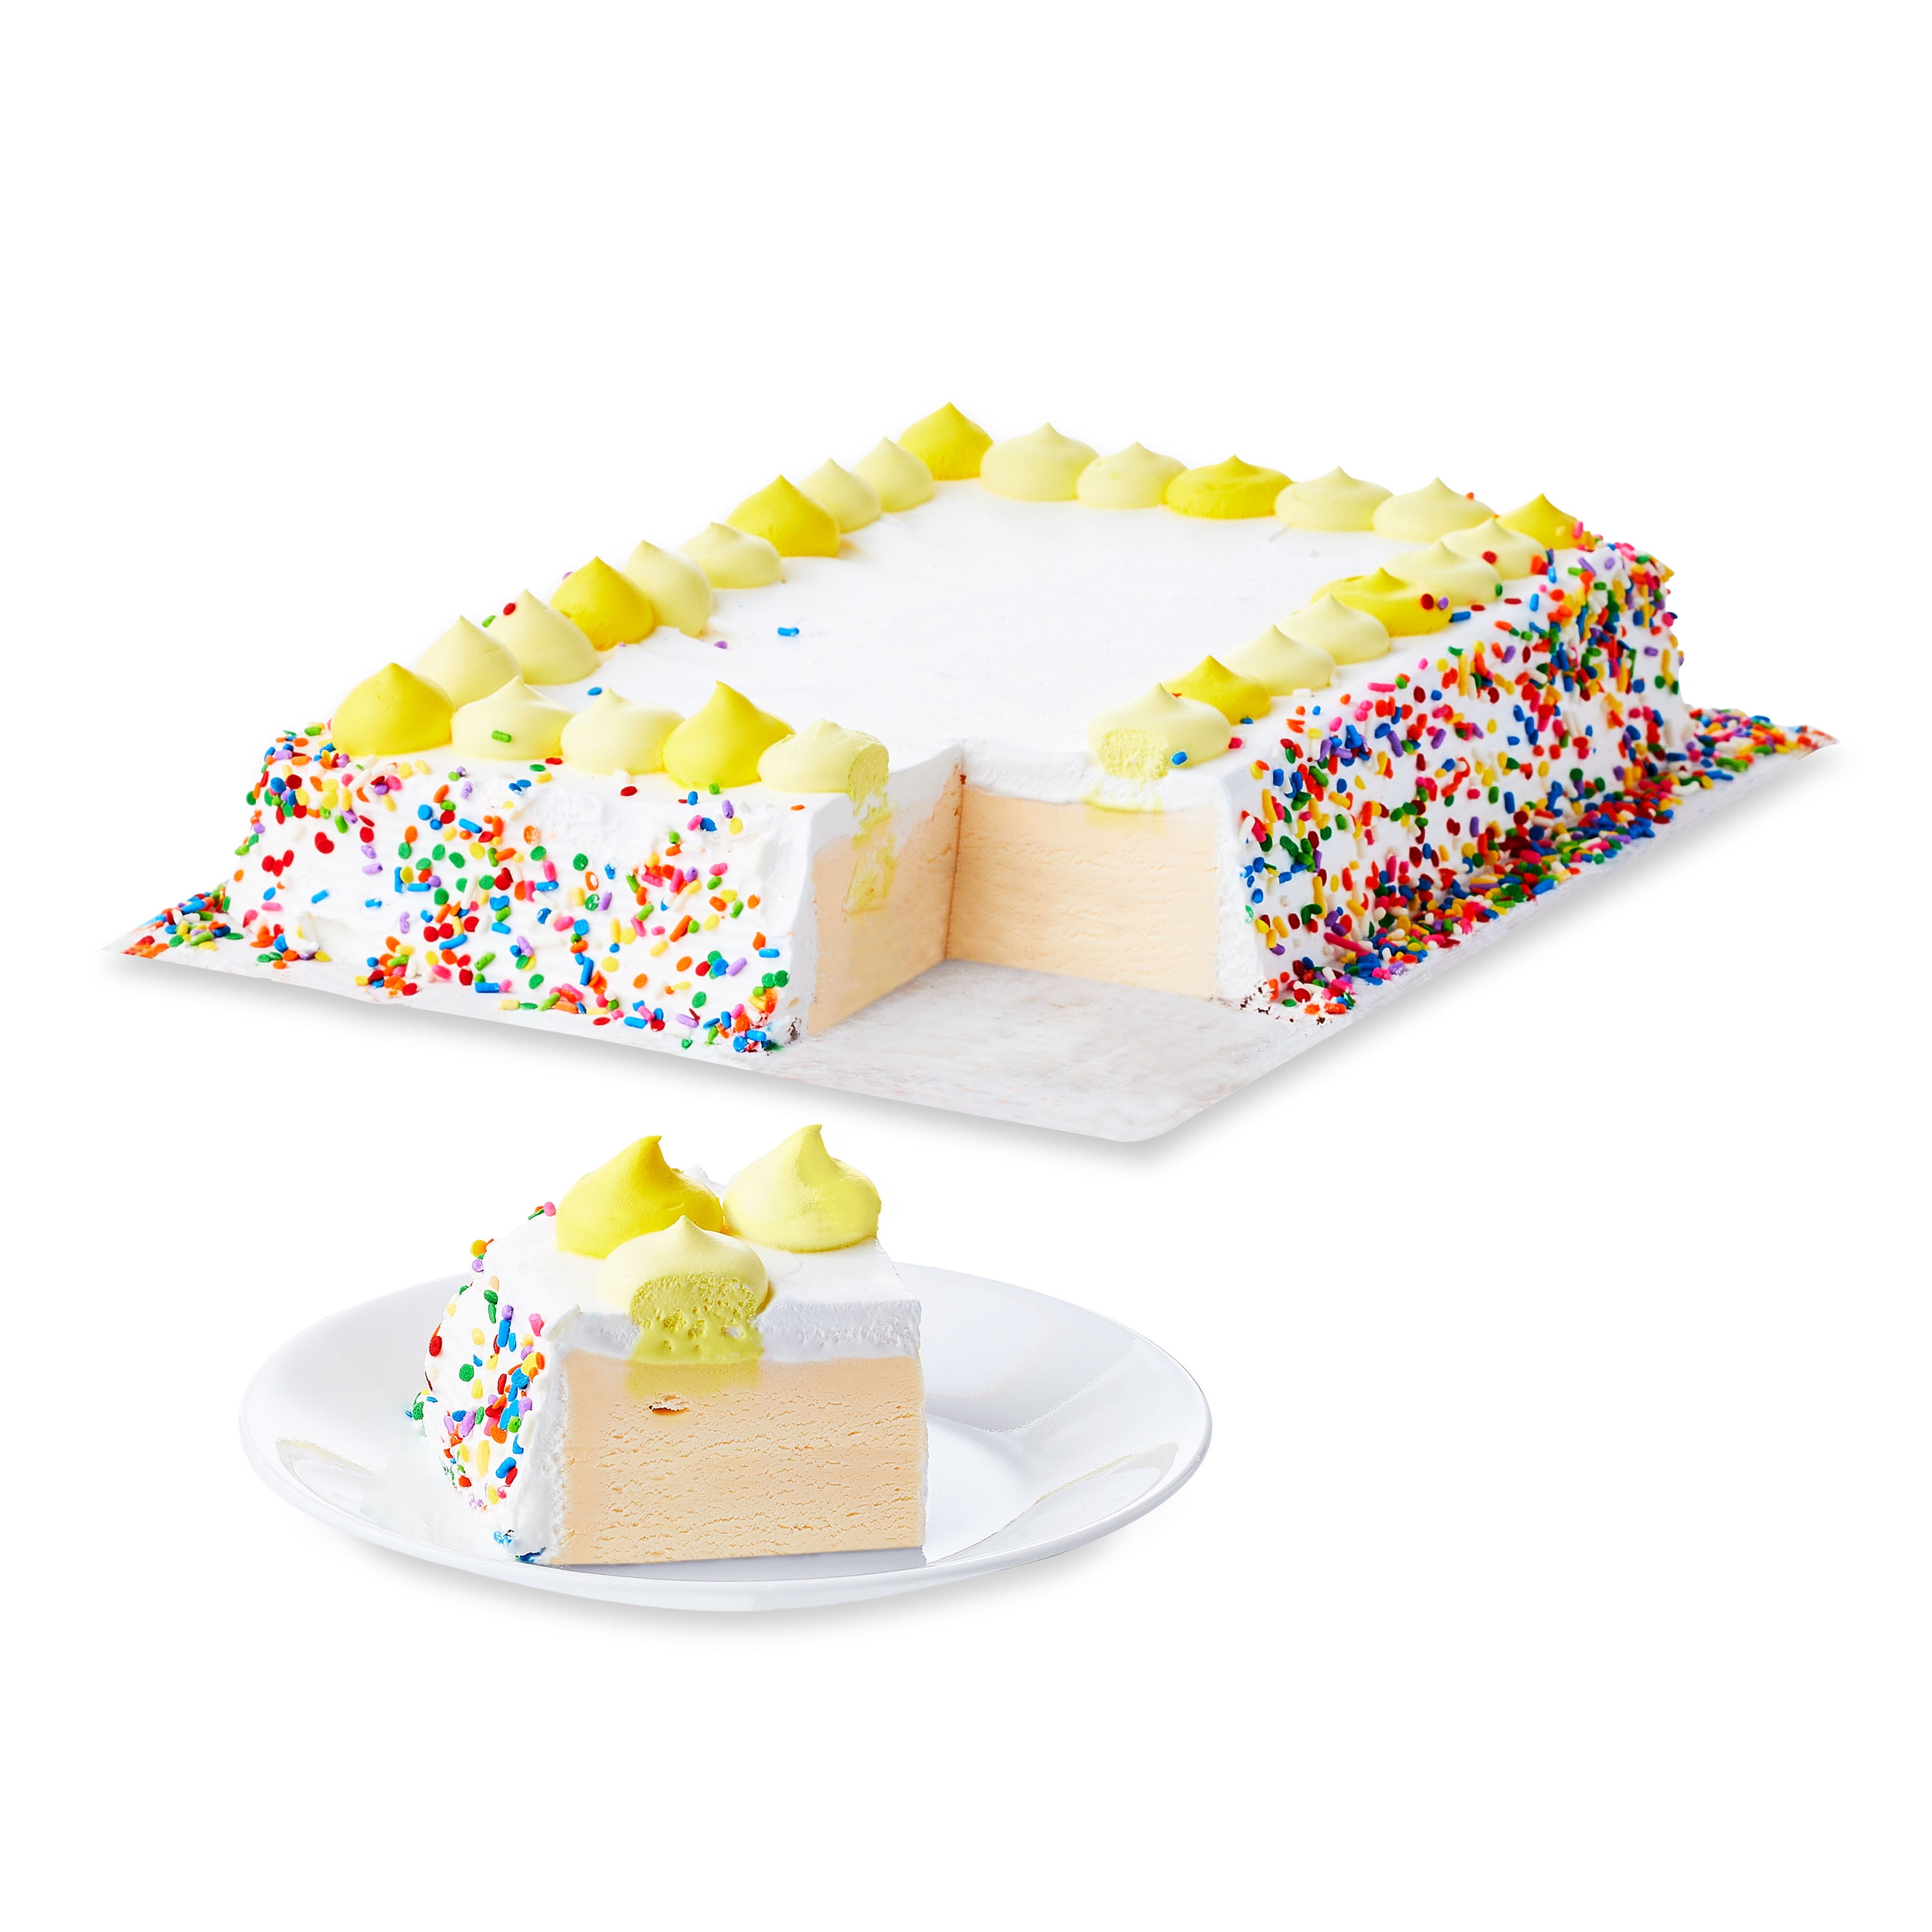 Buy/Send Vanilla Ice Cream Cake Online @ Rs. 2099 - SendBestGift